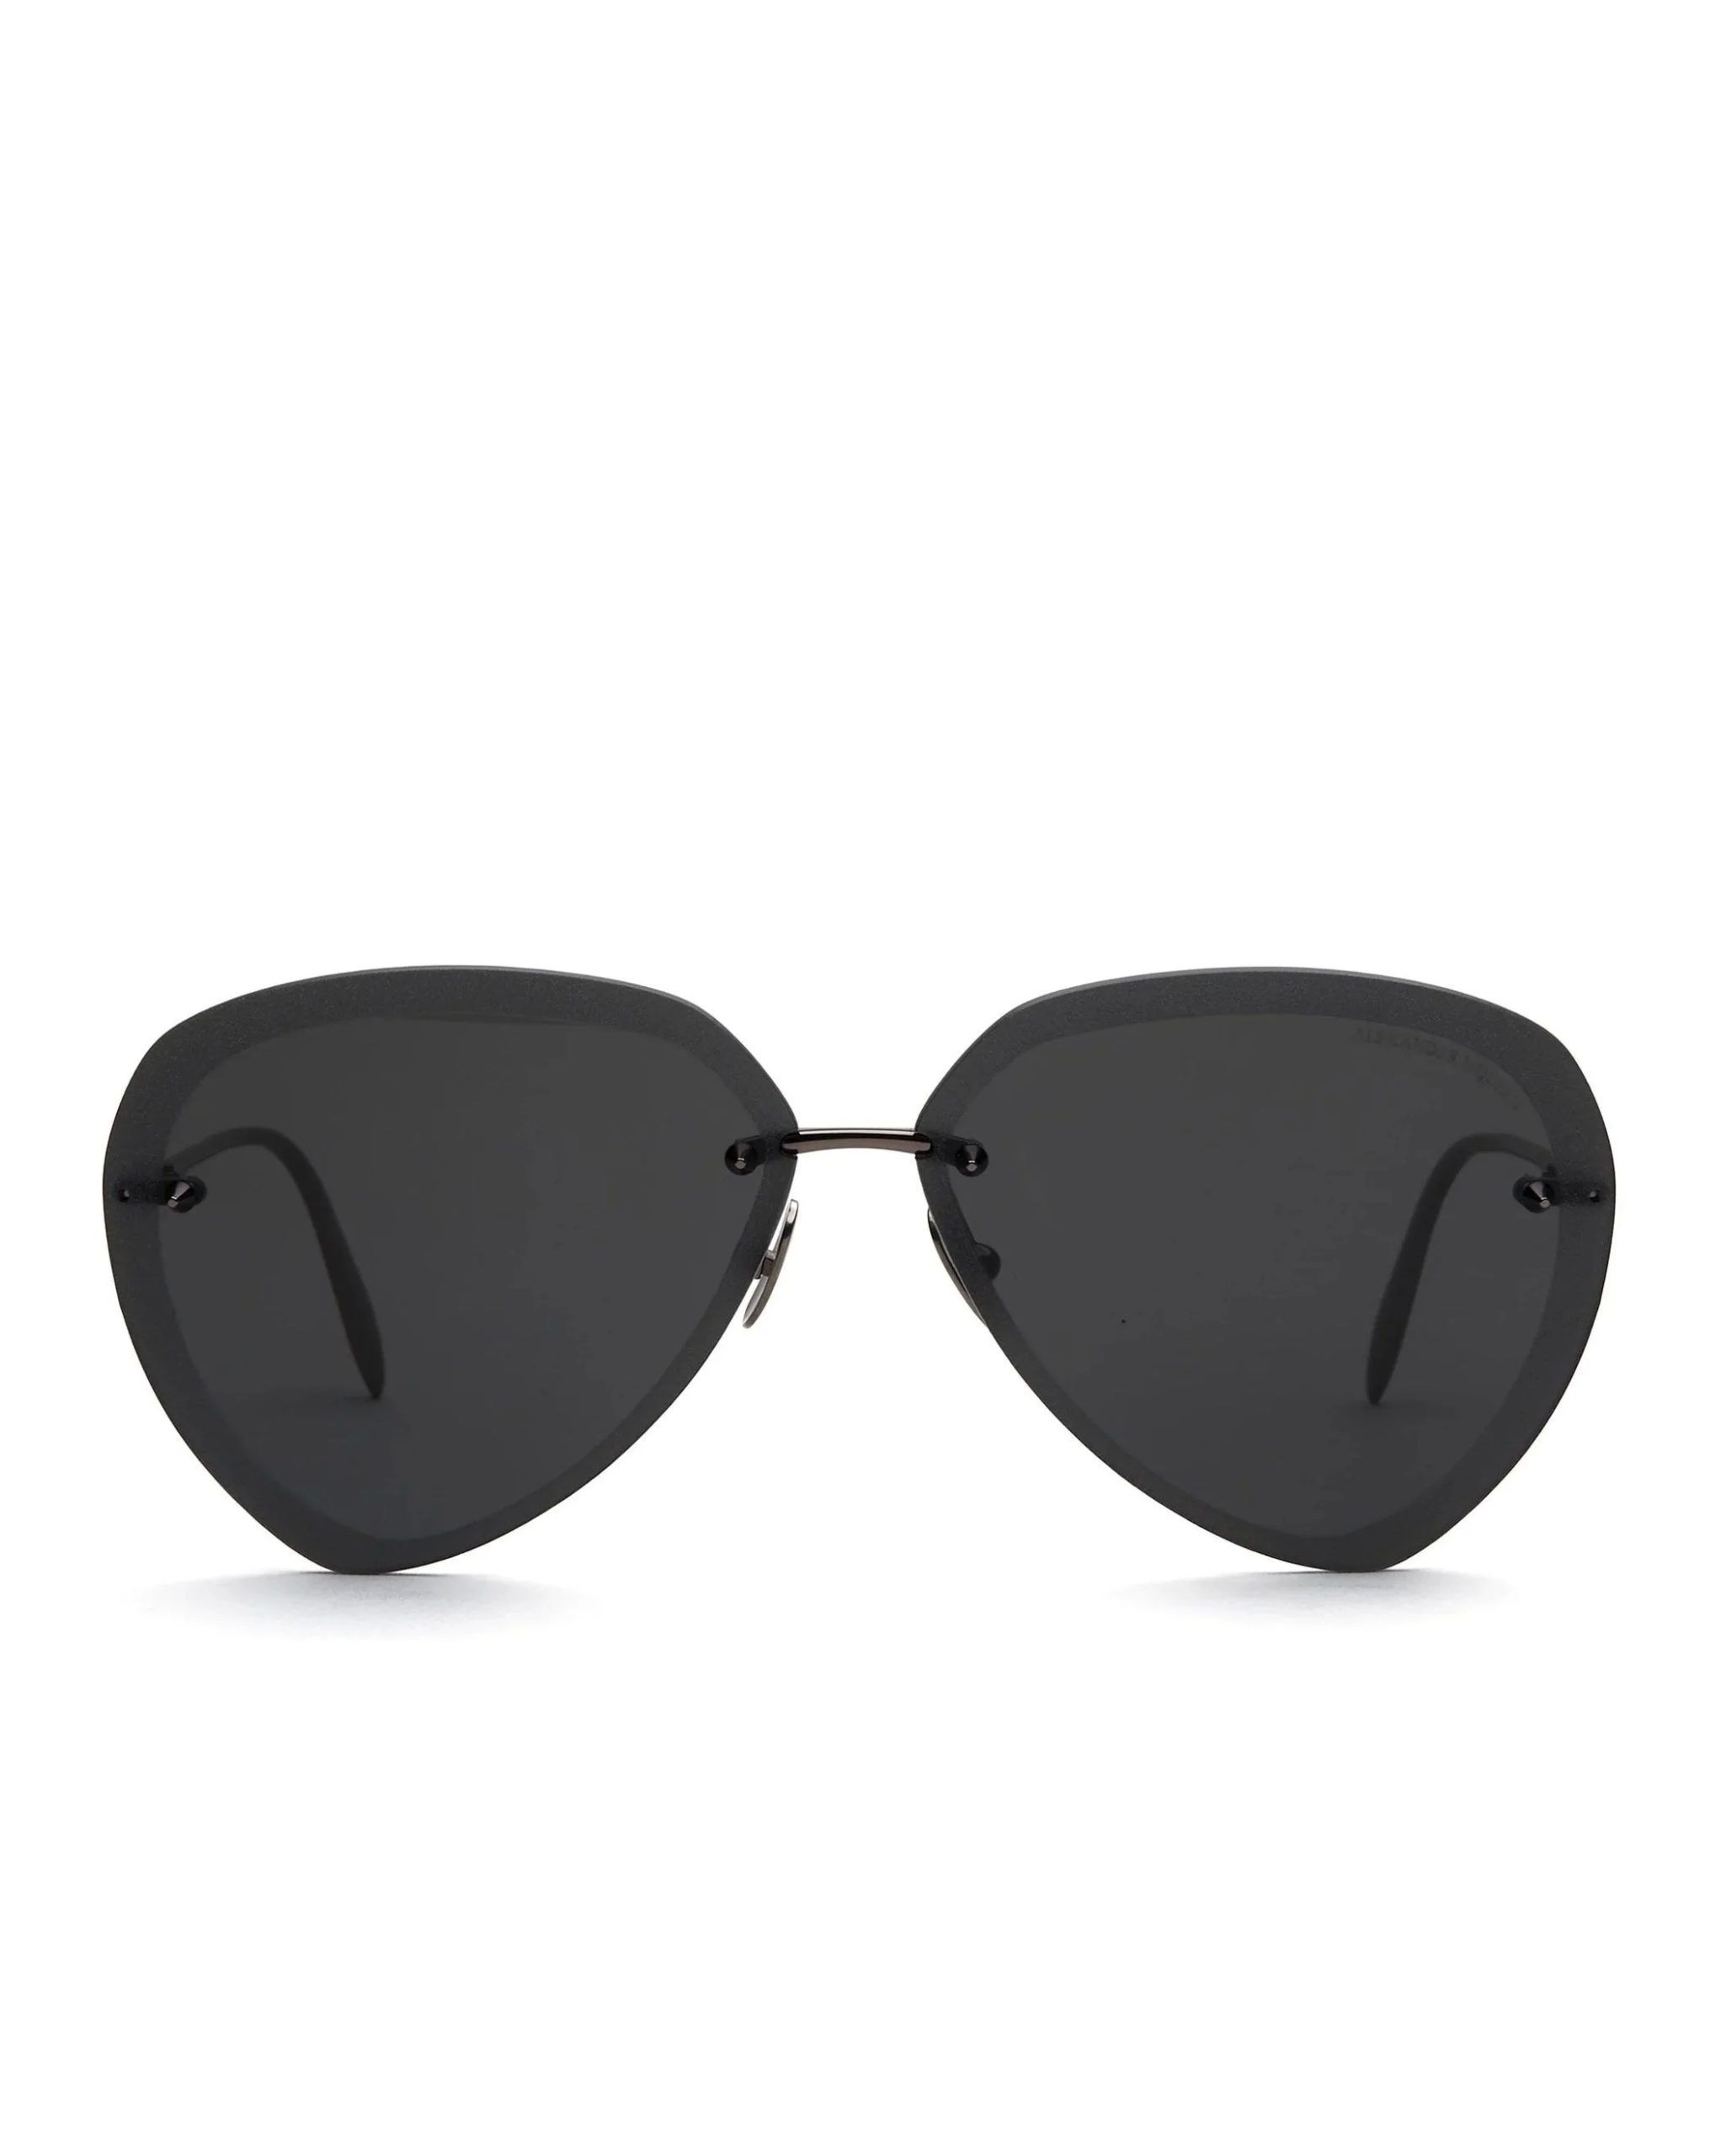 Alexander McQueen AM0120SA 001 Sunglasses